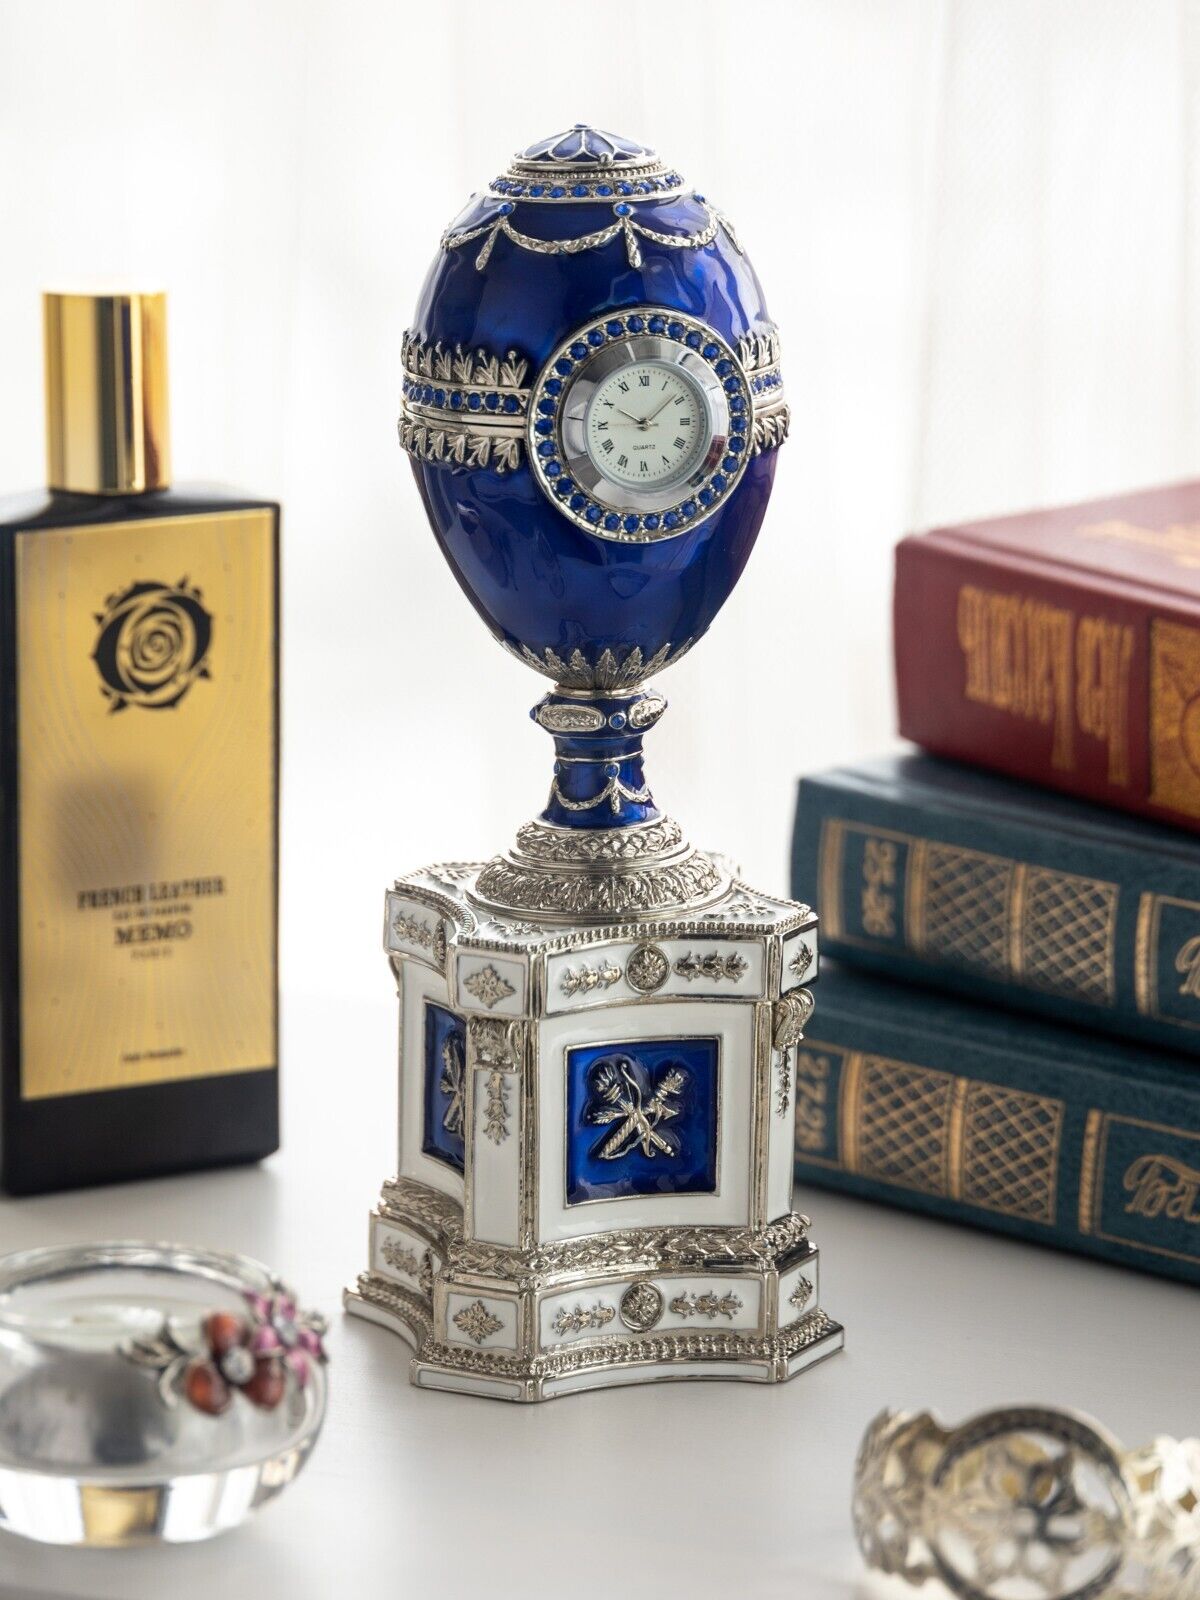 Keren Kopal Blue Egg  with clock Trinket Box Handmade with Austrian Crystals